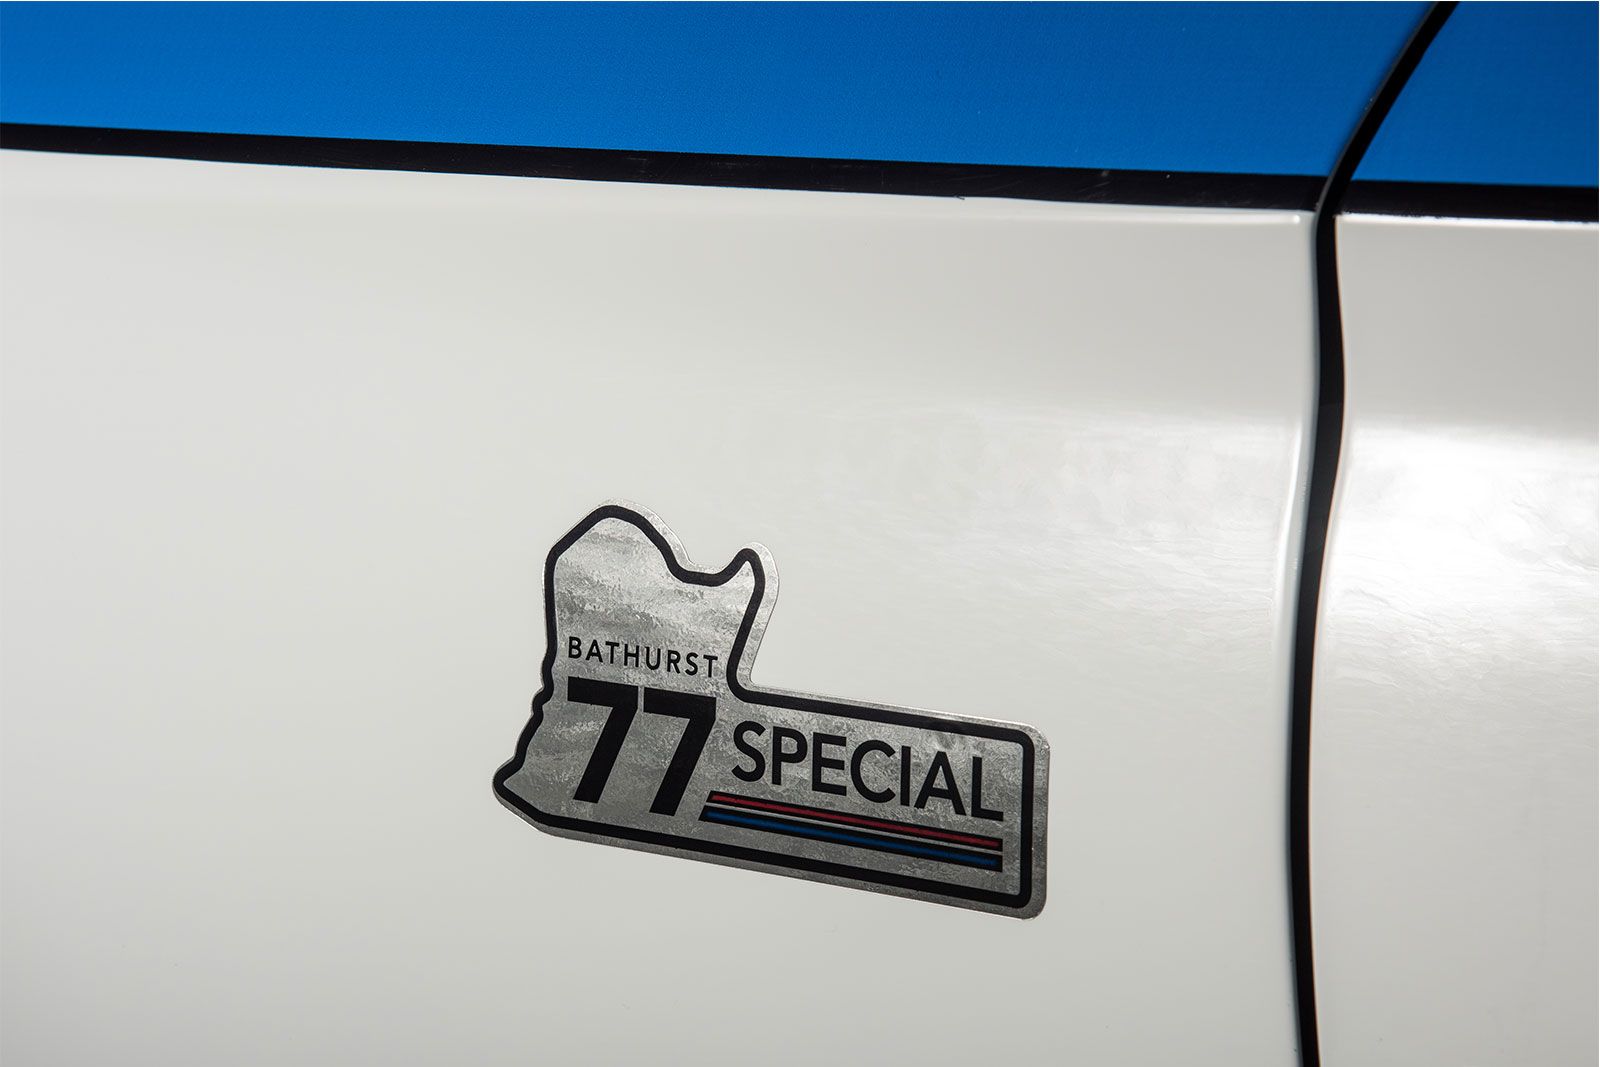 2017 Ford Mustang Tickford Bathurst ’77 Special Edition